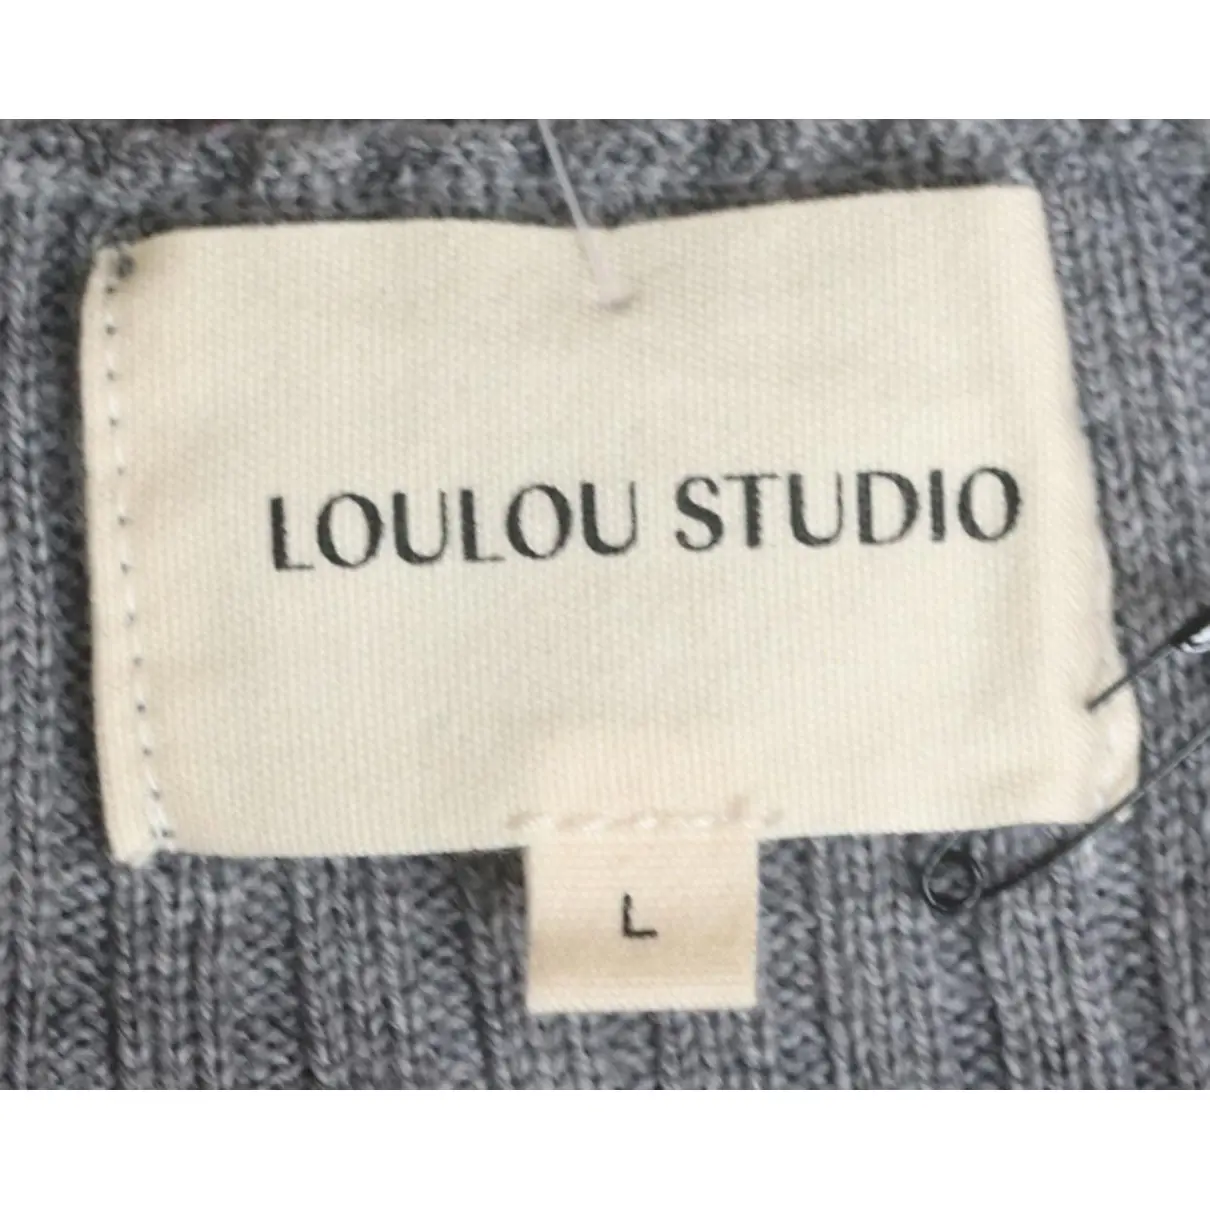 Wool dress Loulou studio